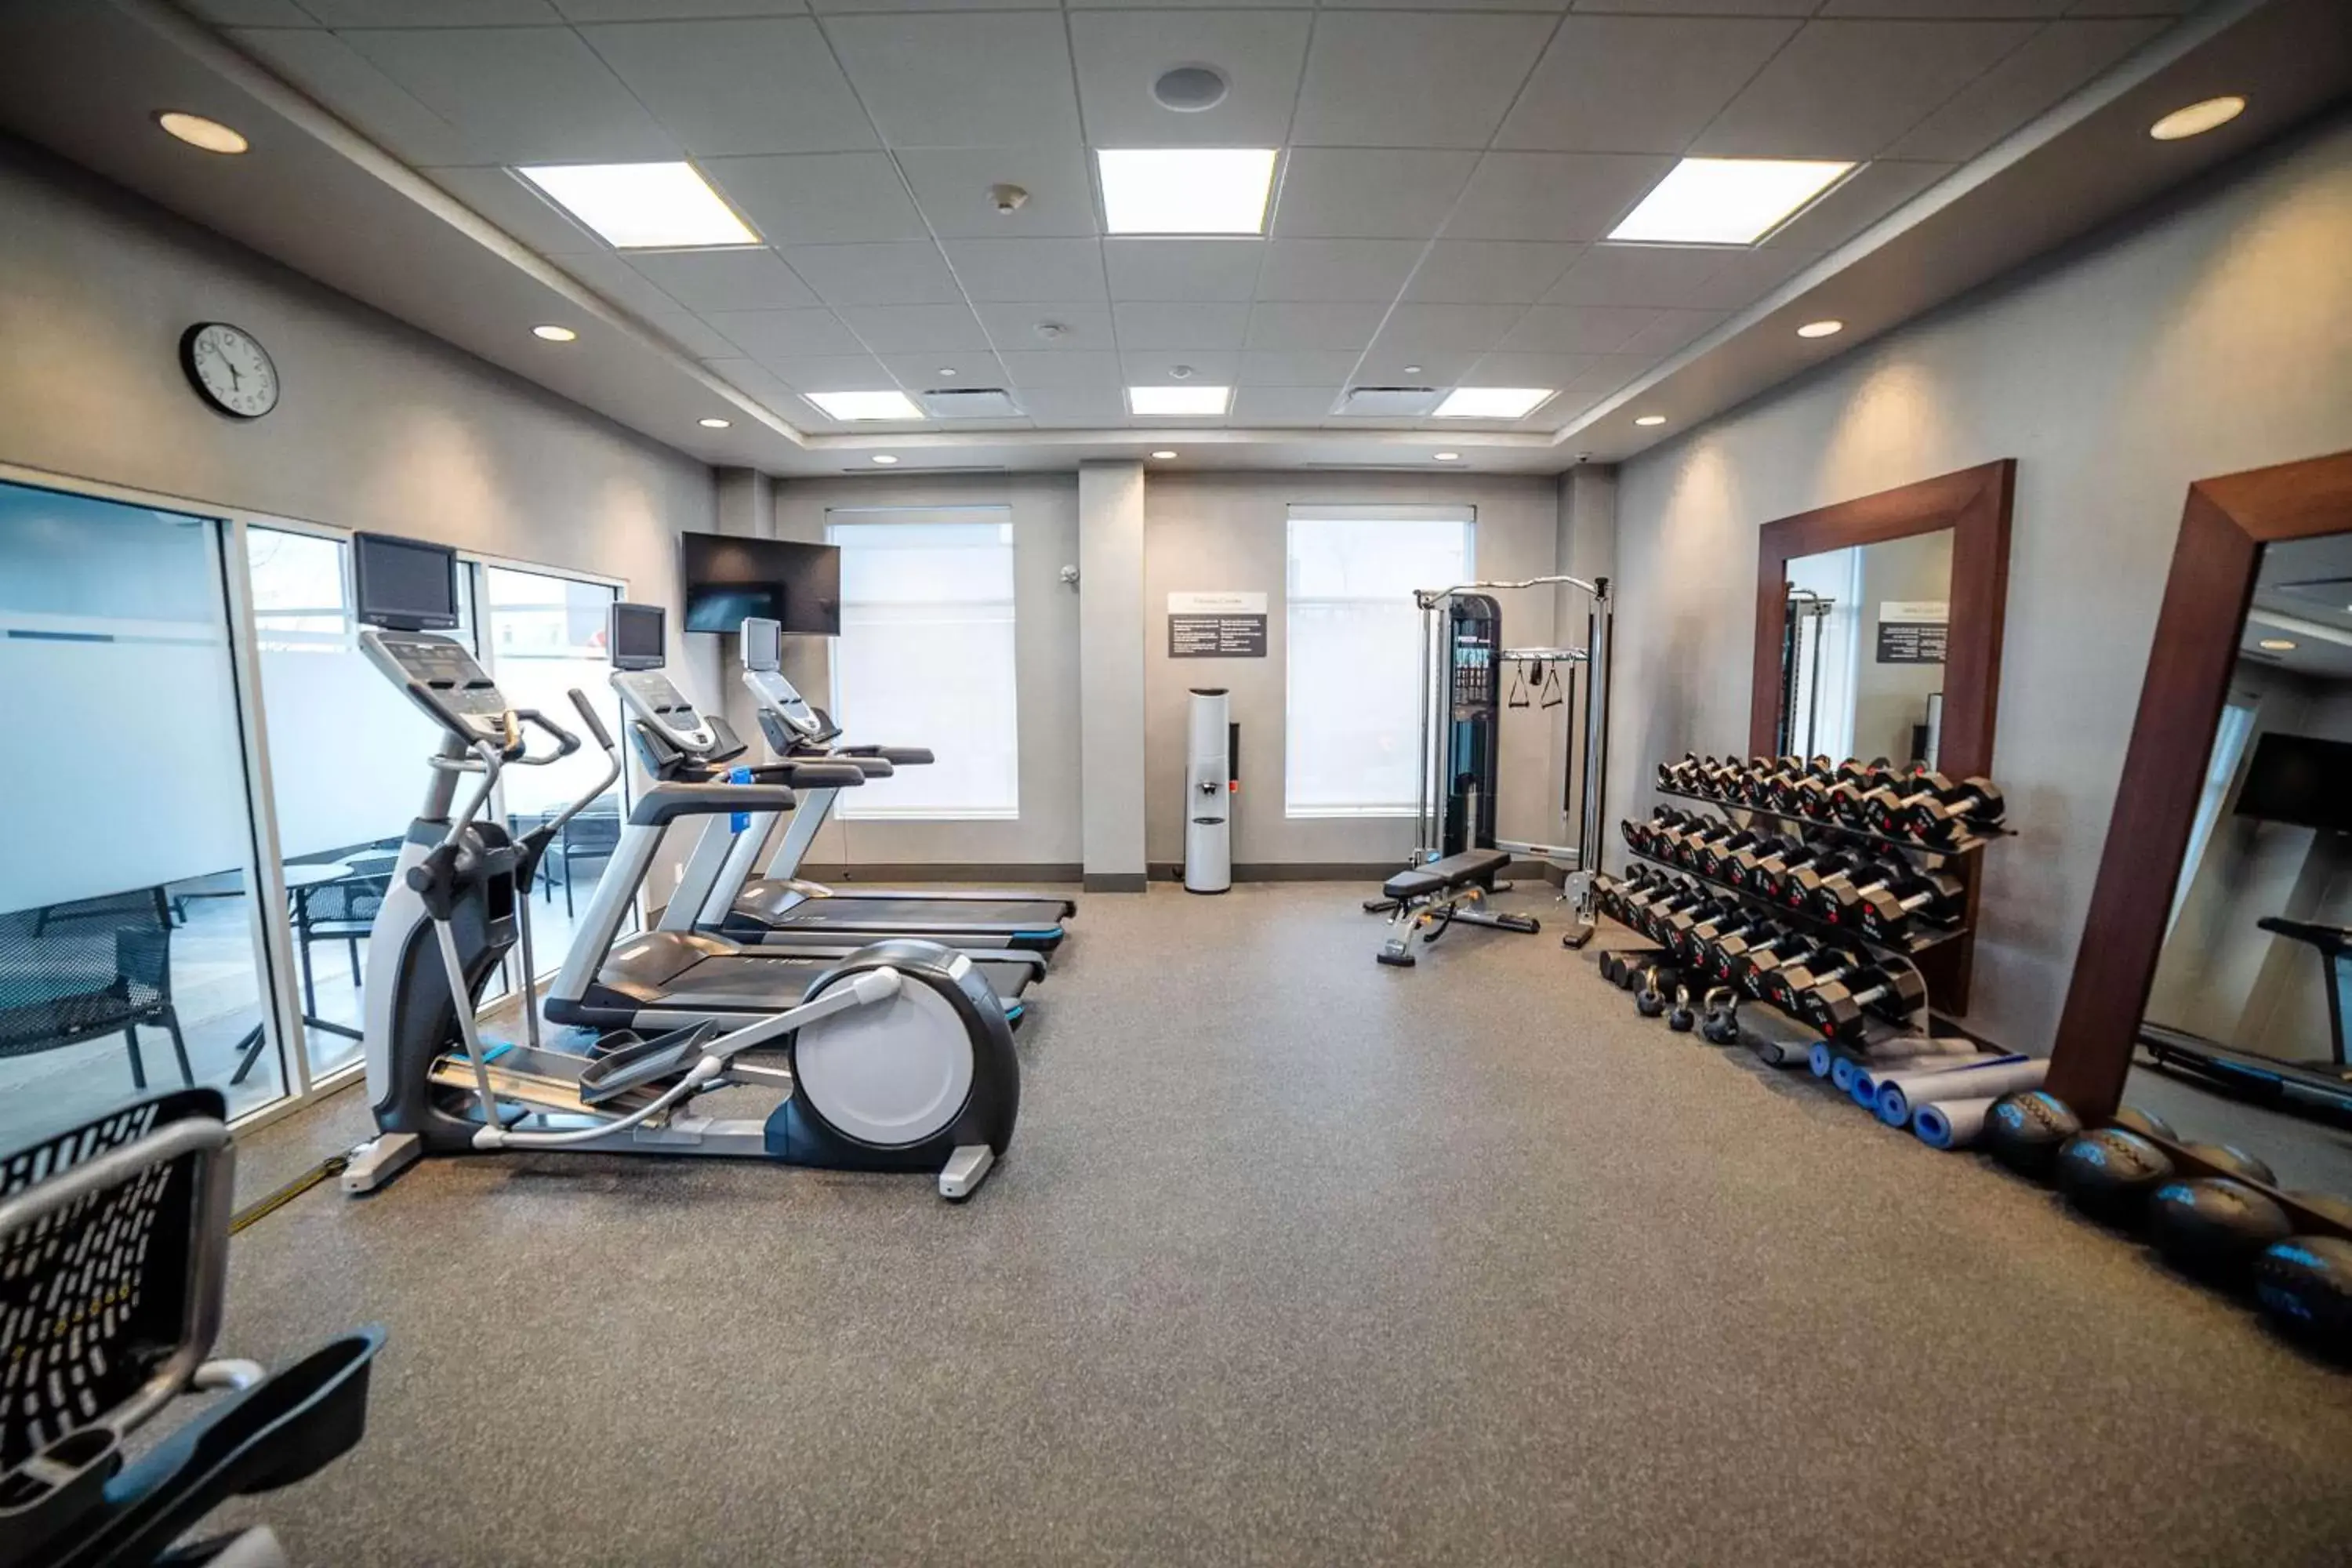 Fitness centre/facilities, Fitness Center/Facilities in Hilton Garden Inn Sudbury, Ontario, Canada